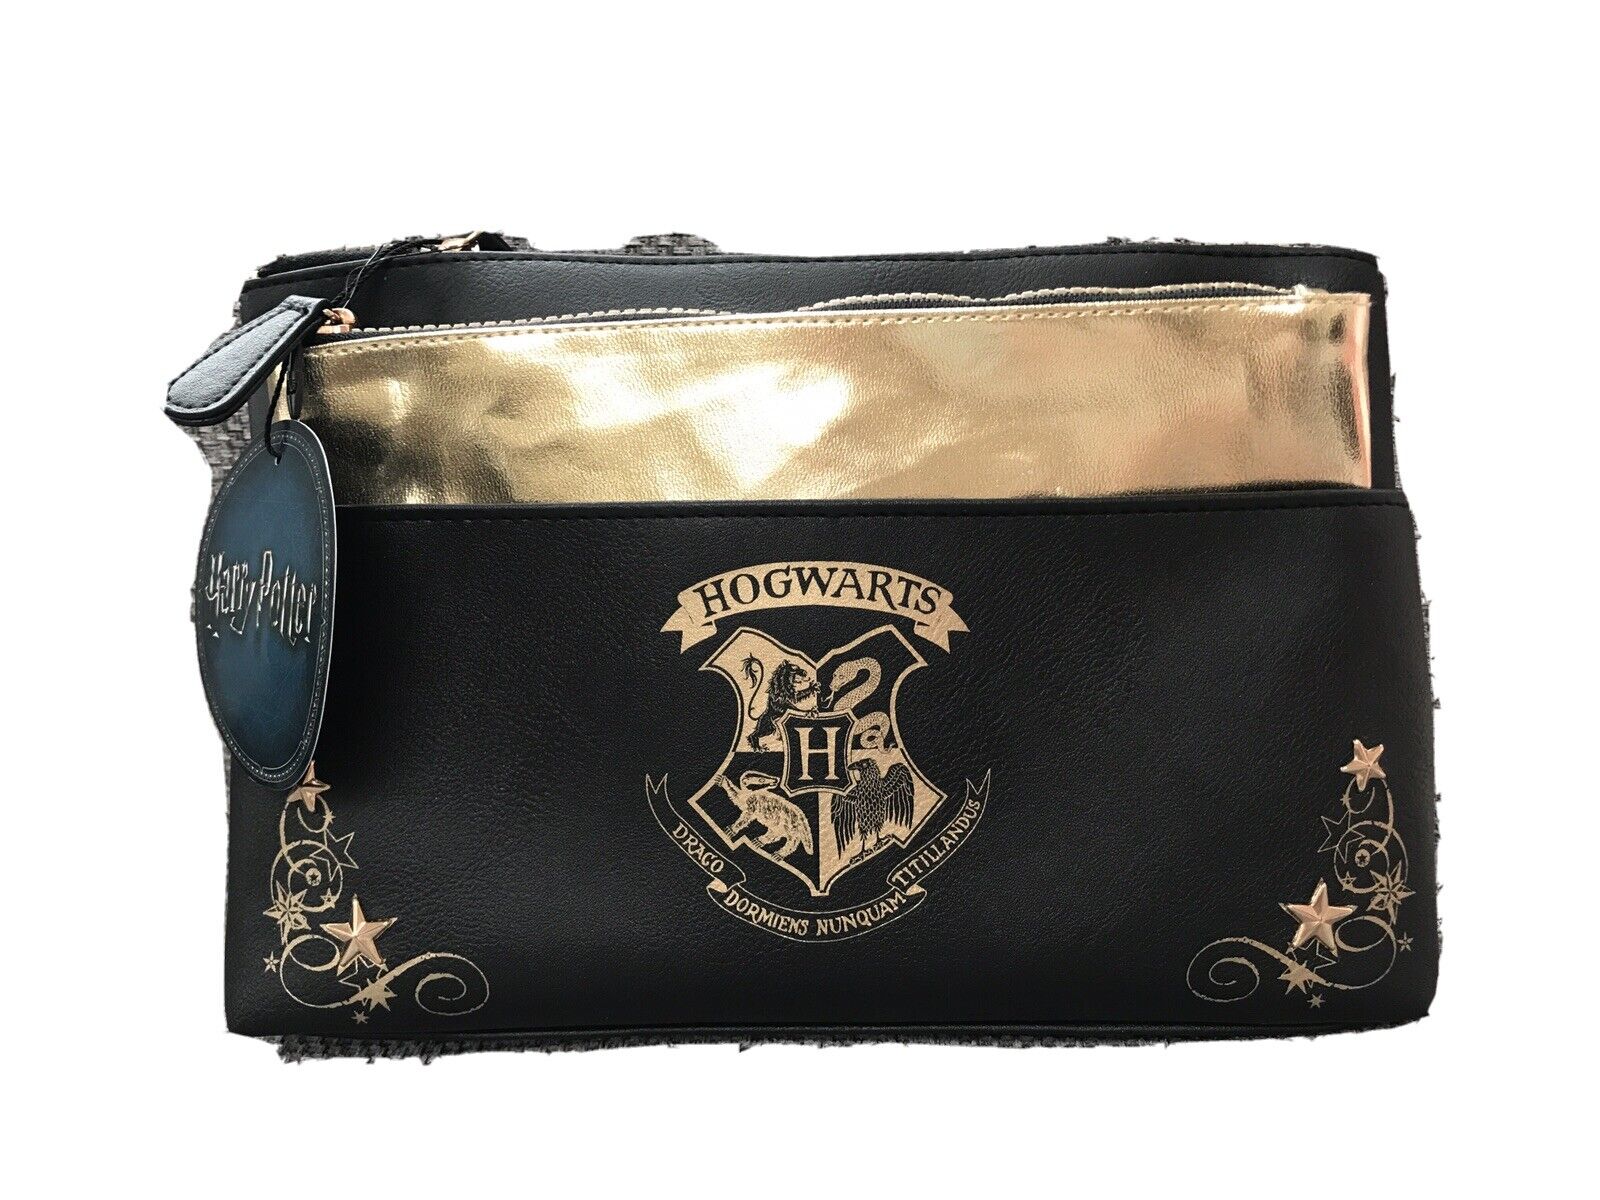 BNWT Harry Potter Black & Gold X2 Make Up Bag Cosmetic Bags Hogwarts Primark